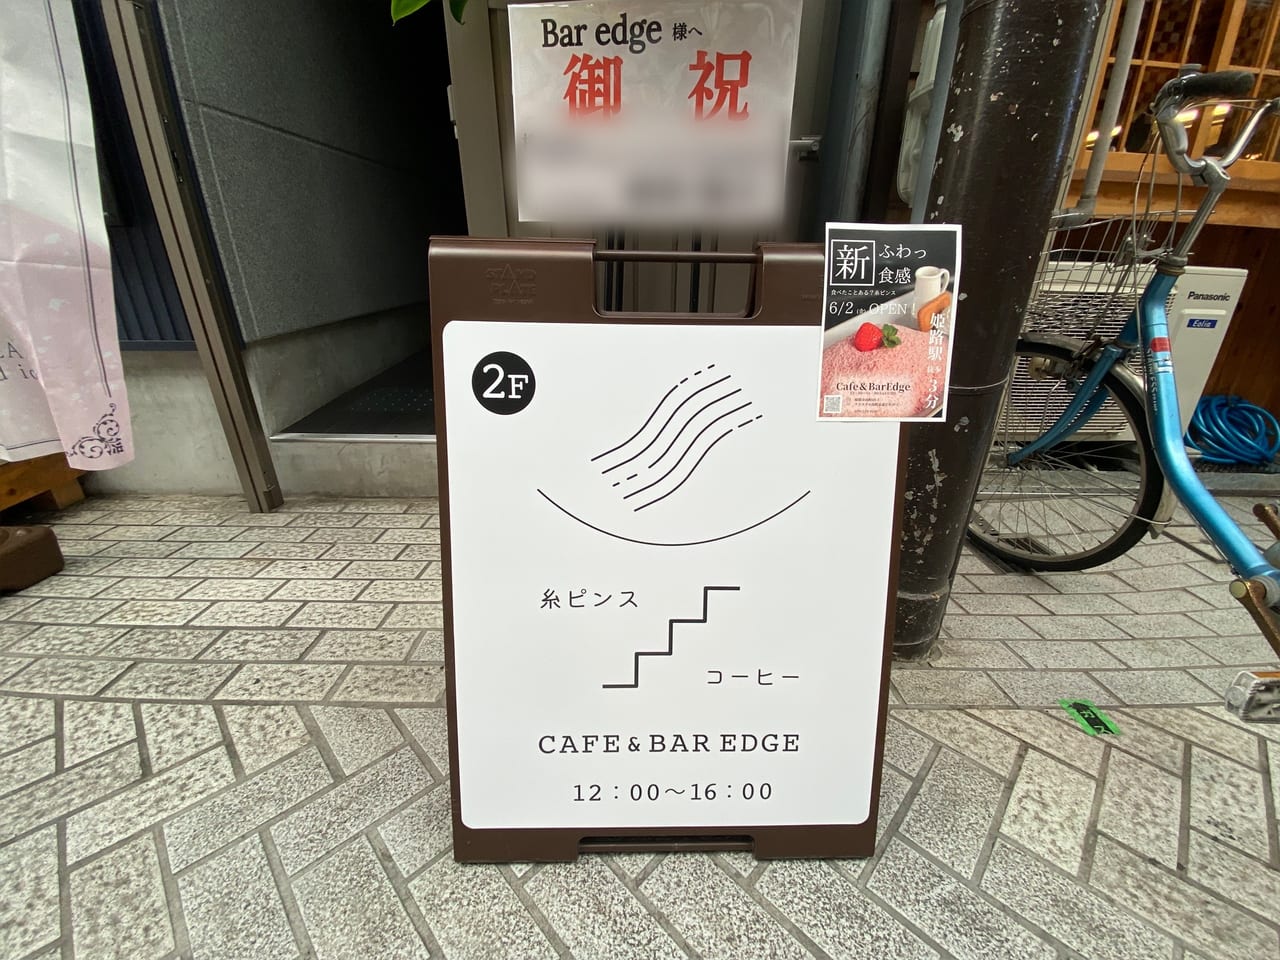 Cafe & Bar edge